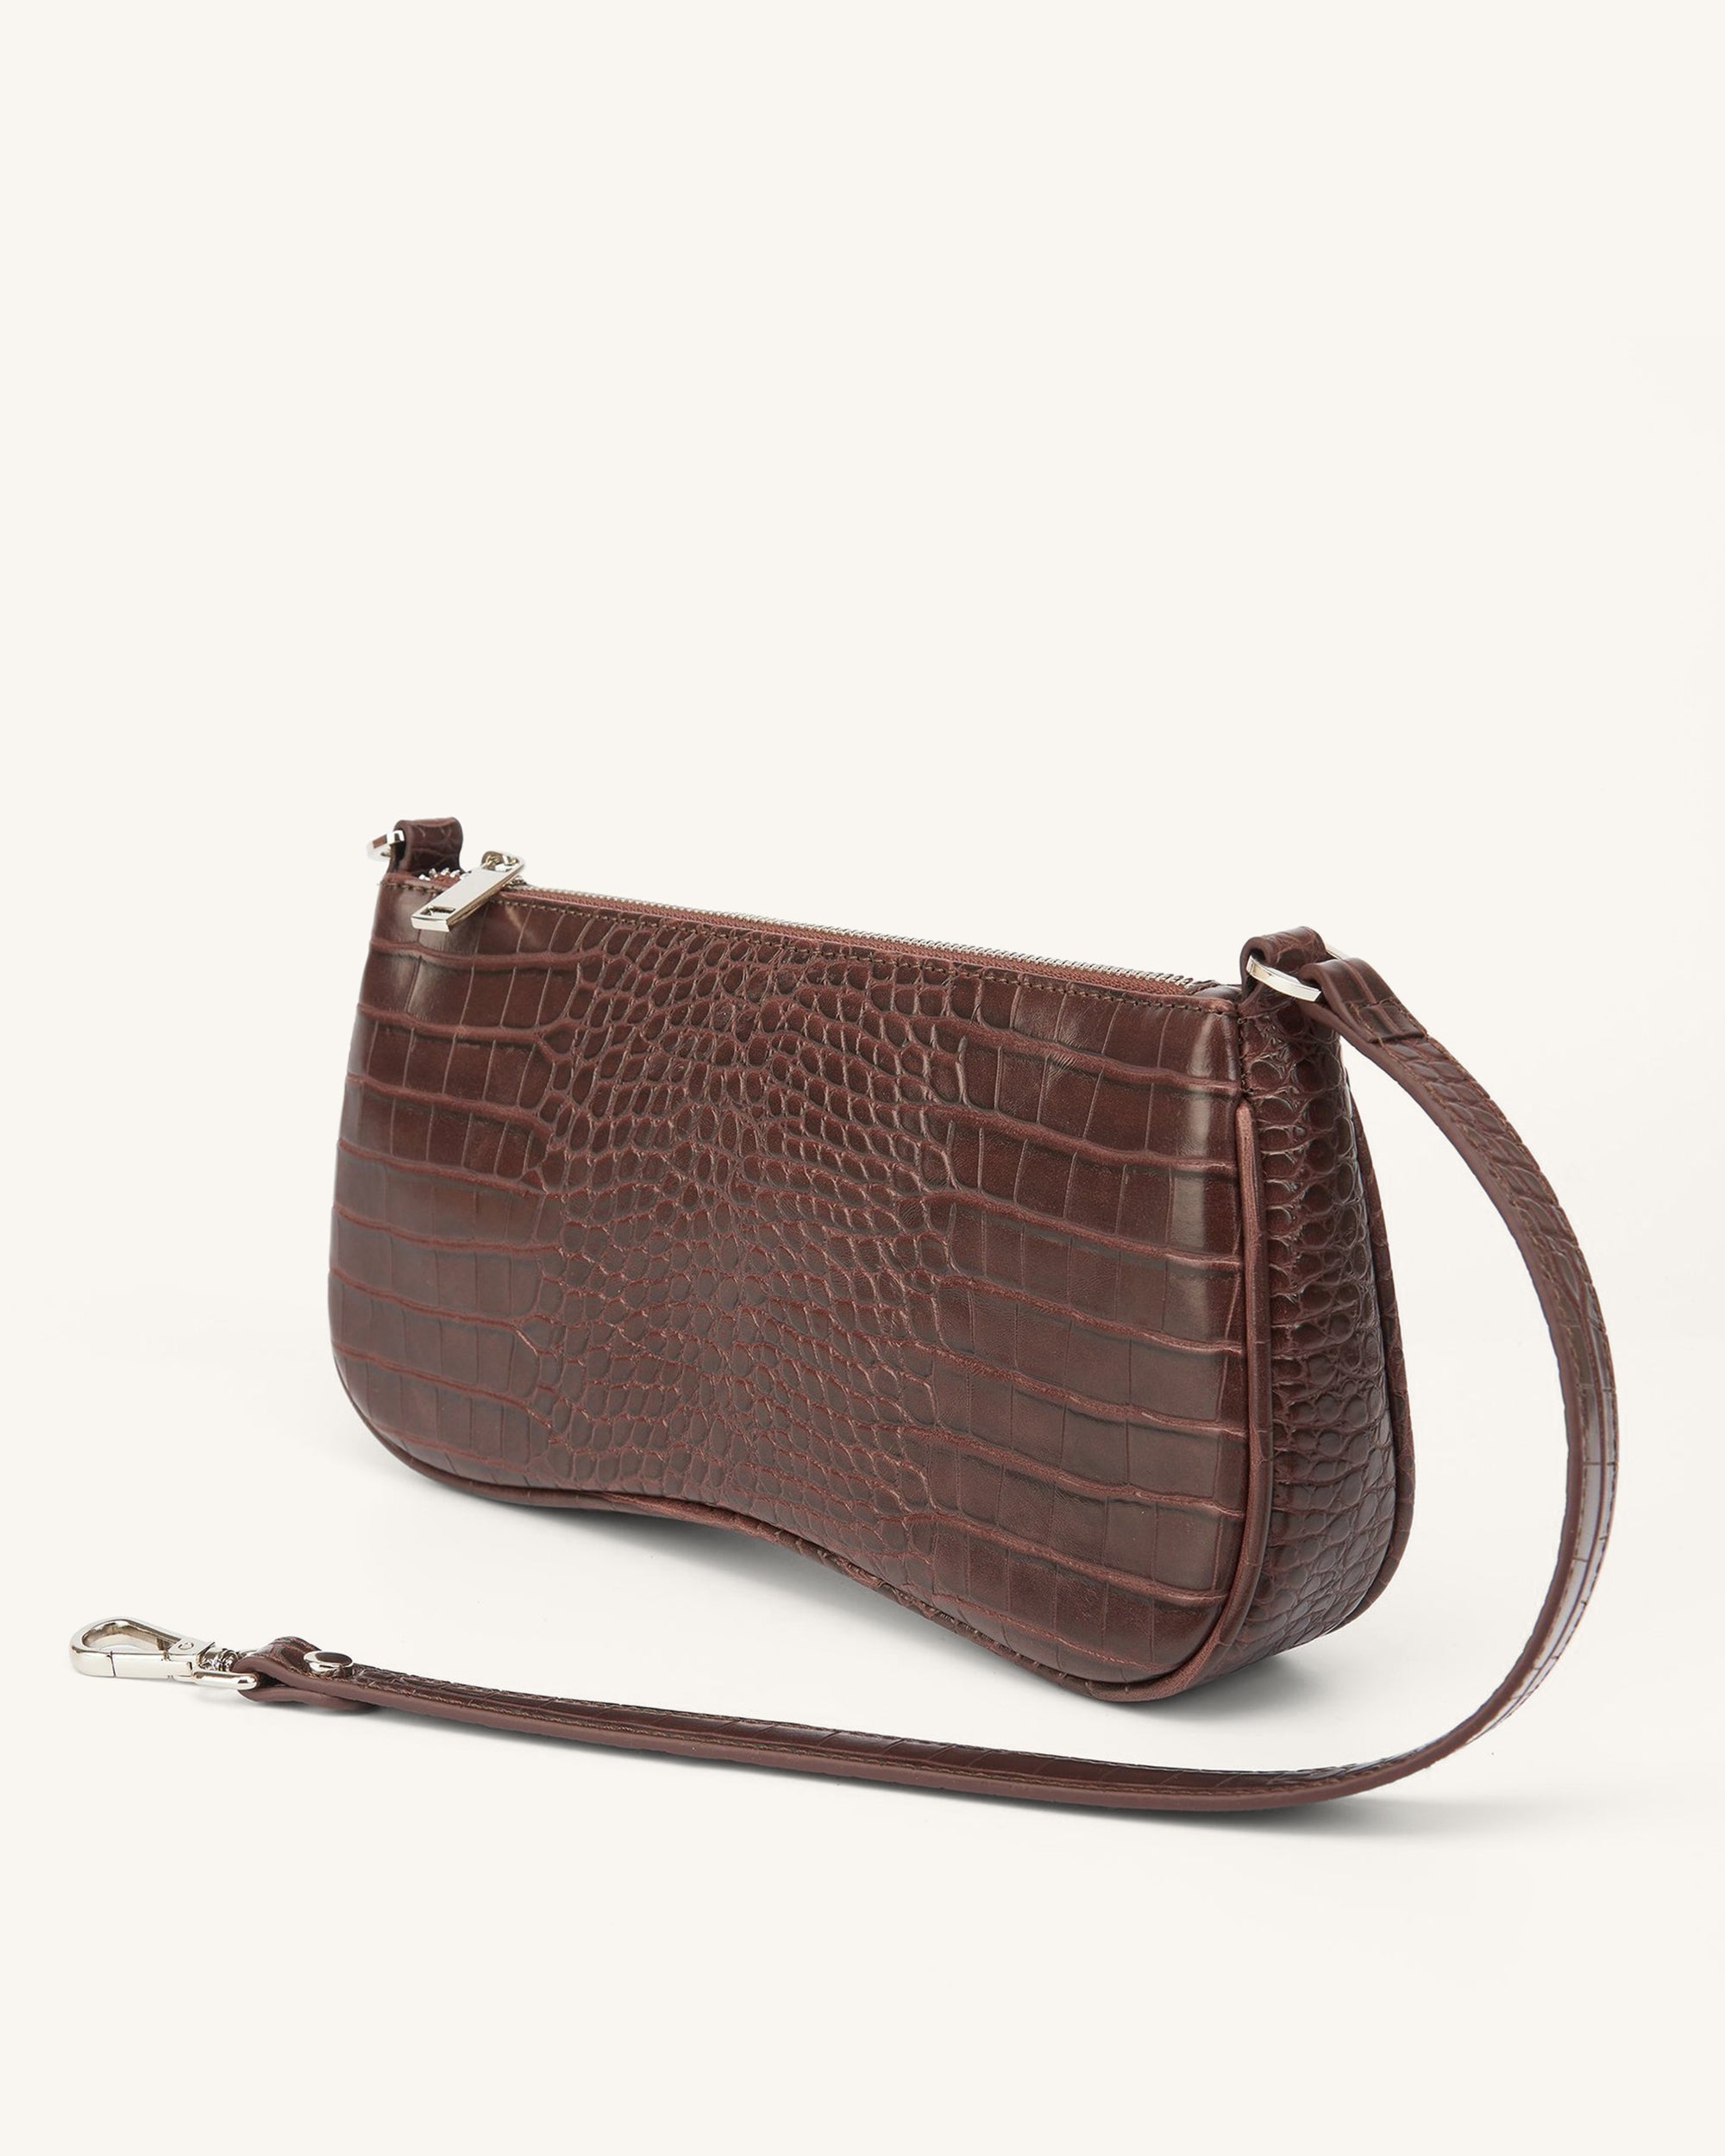 Rantan Bag - Brown Croc - Vegan Leather - JW PEI Official Sale